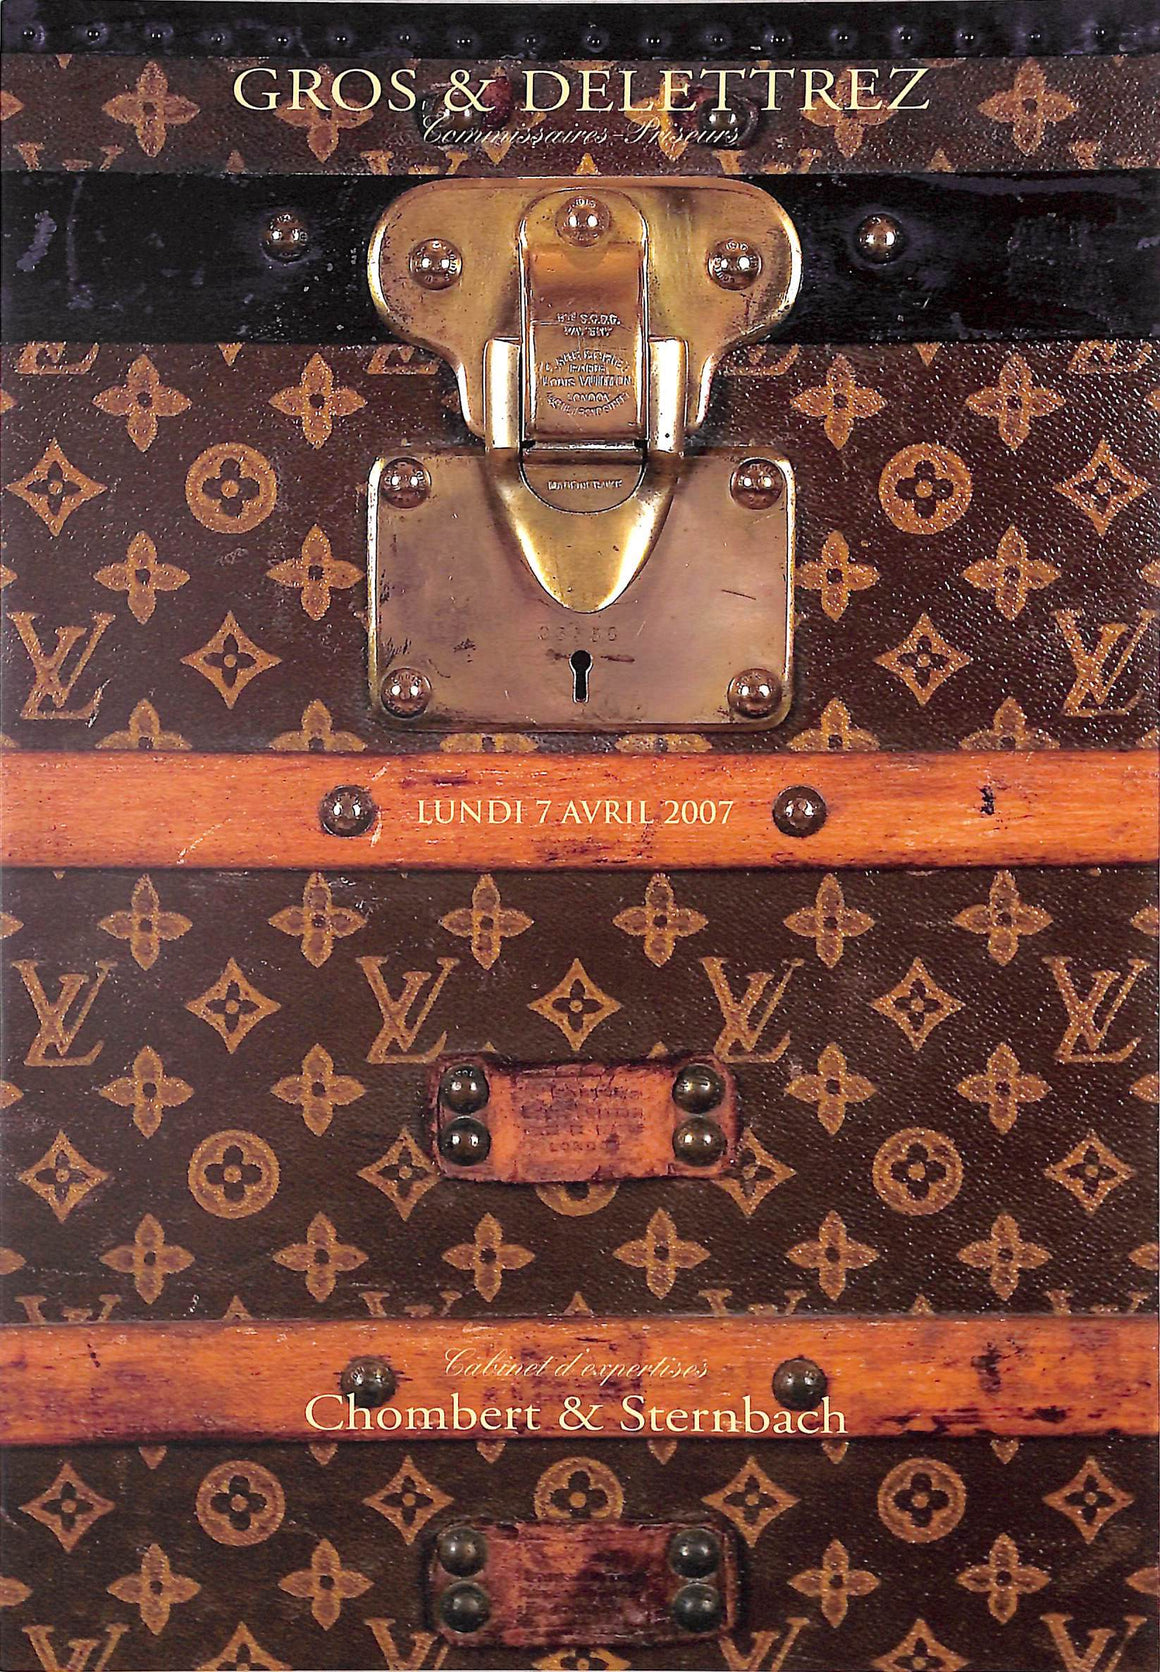 Sold at Auction: LV Checkered Print Crossbody Bag